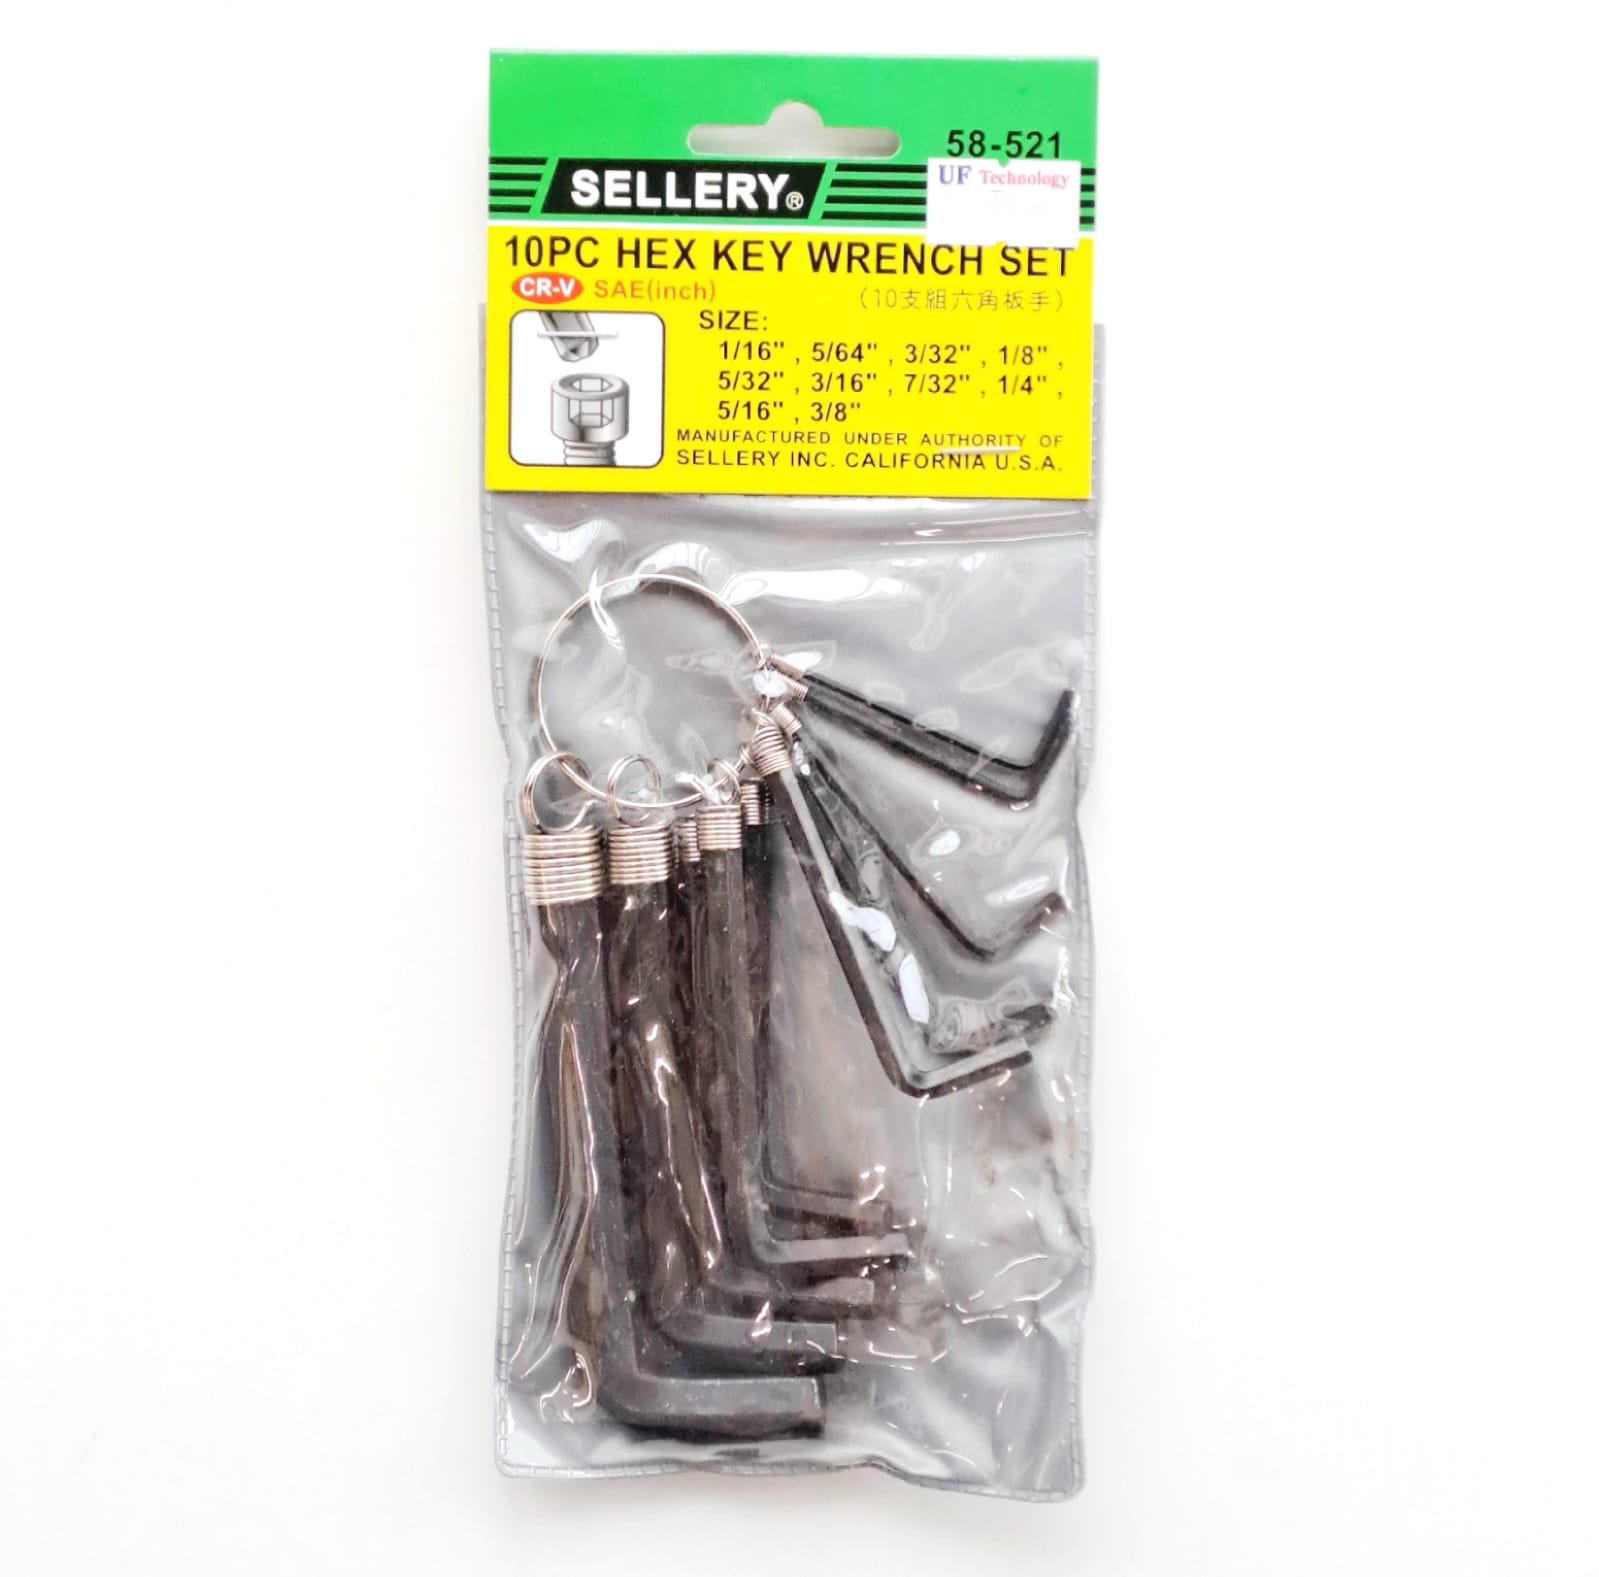 Sellery 58-521 10pc Hex Key Wrench Set (CR-V), Size: 1/16, 5/64, 3/32, 1/8, 5/32, 3/16, 7/32, 1/4, 5/16, 3/8